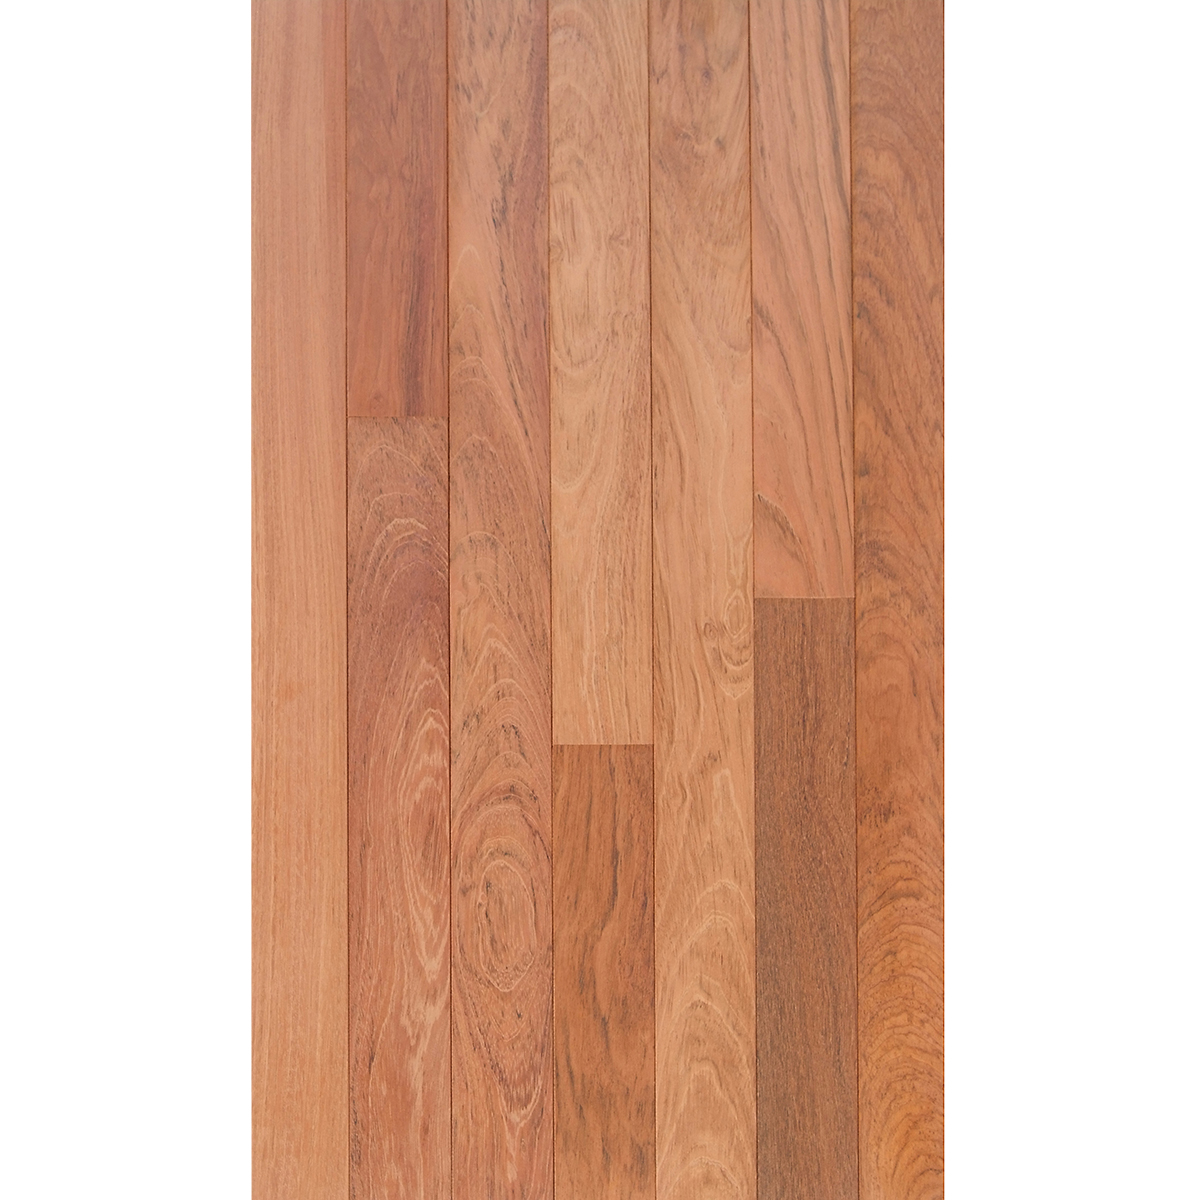 Brazilian Cherry 3 4 X Select Grade, Unfinished Cherry Hardwood Flooring